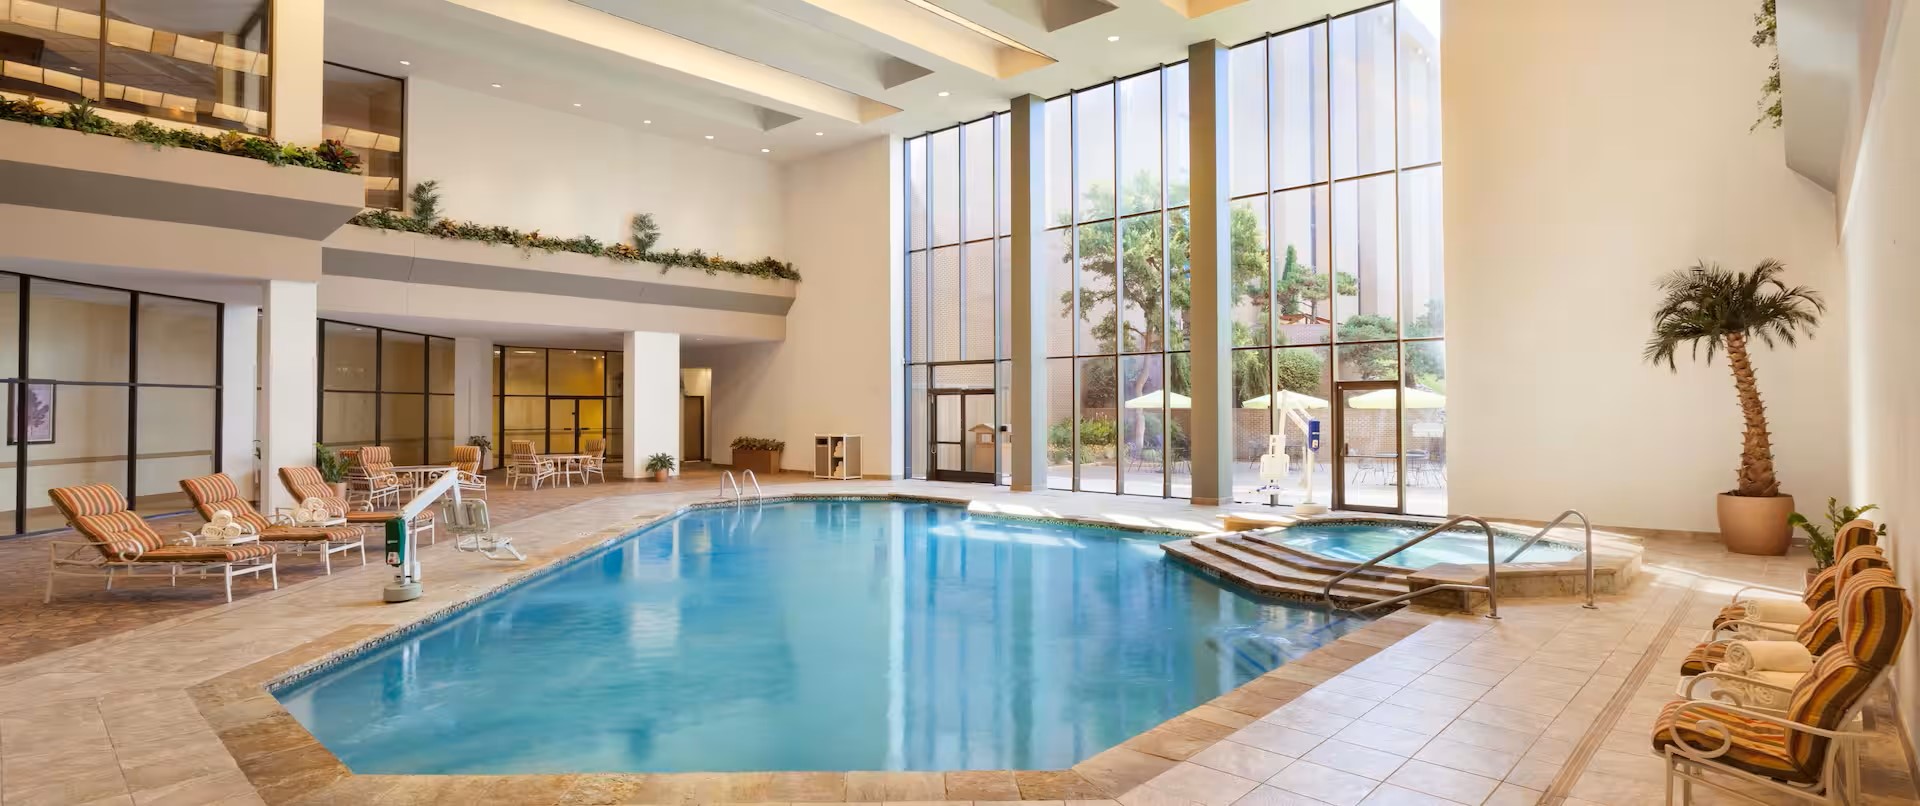 Hilton DFW Lakes Indoor Pool Restaurant